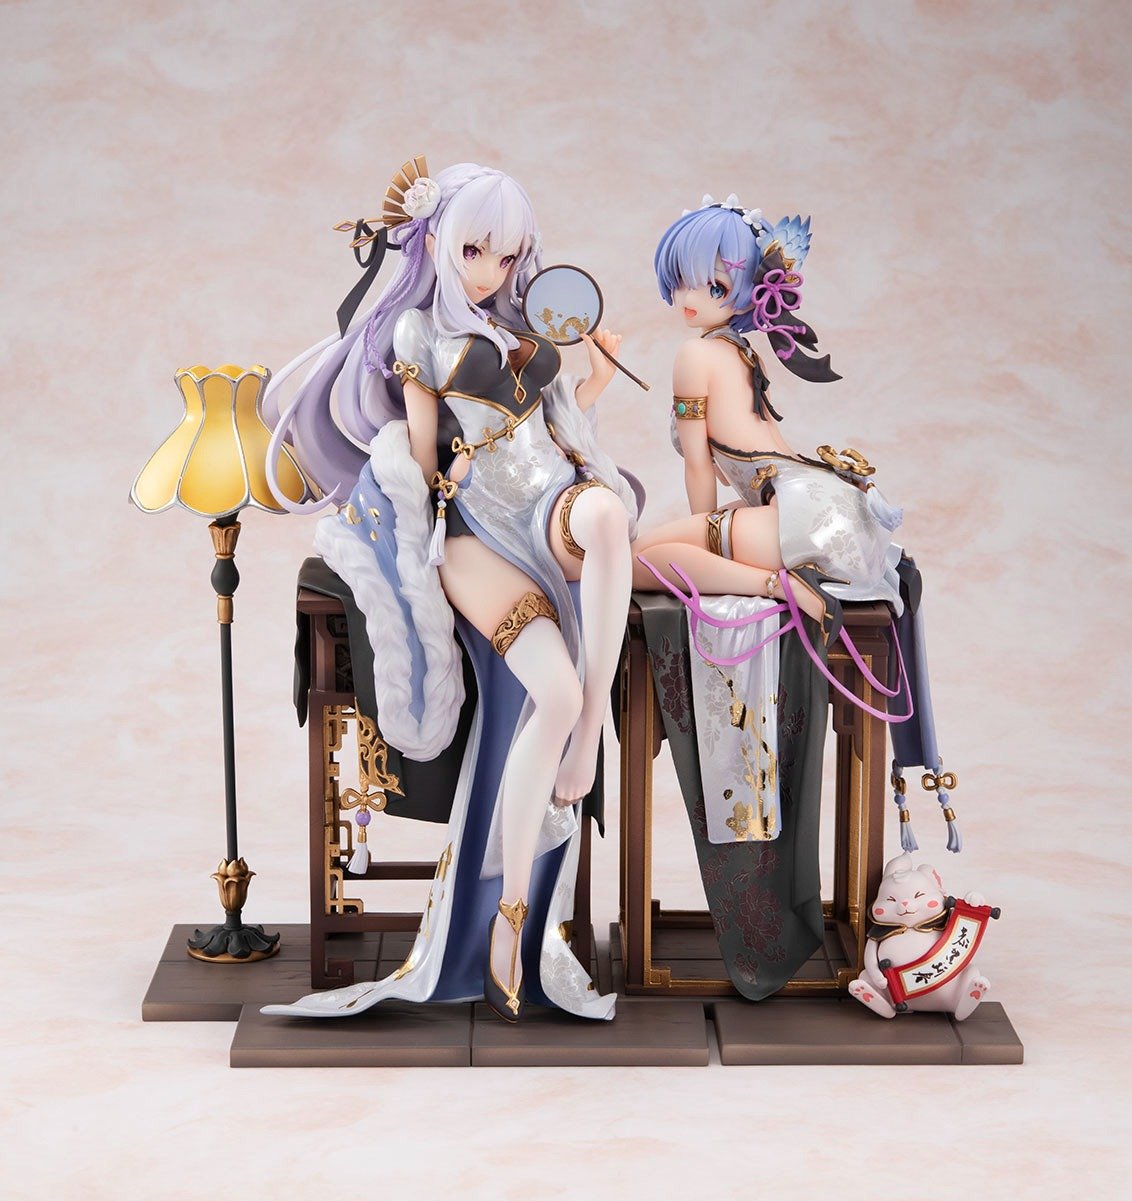 Figurine Re:Zero kara Hajimeru Isekai Seikatsu - Emilia et Rem - Ver. Elegant Beauty - 1/7 - KDcolle - Kadokawa